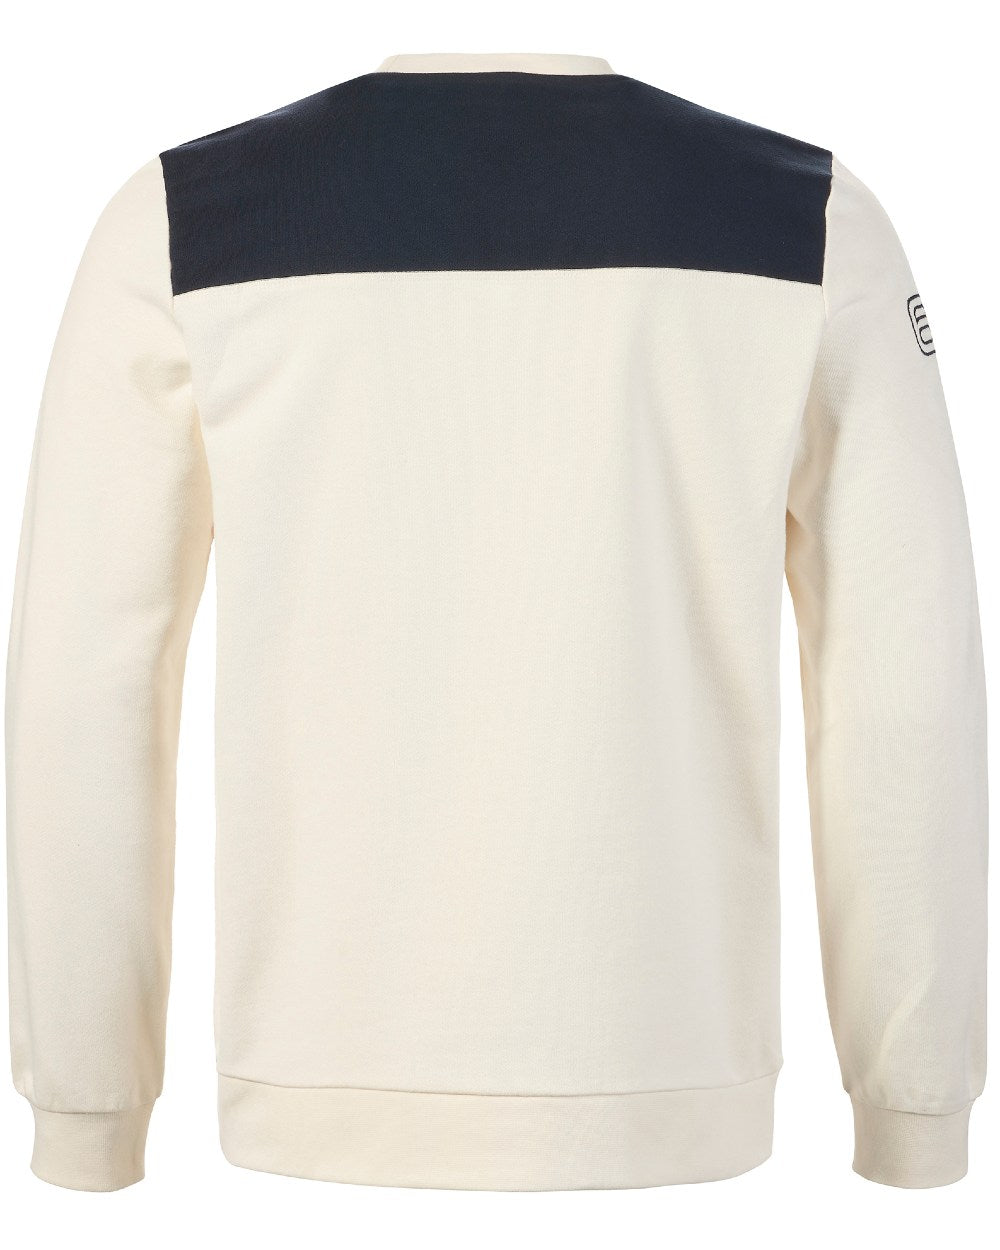 Antique Sail White/Navy Musto Mens 64 Tri Colour Sweatshirt On A White Background 